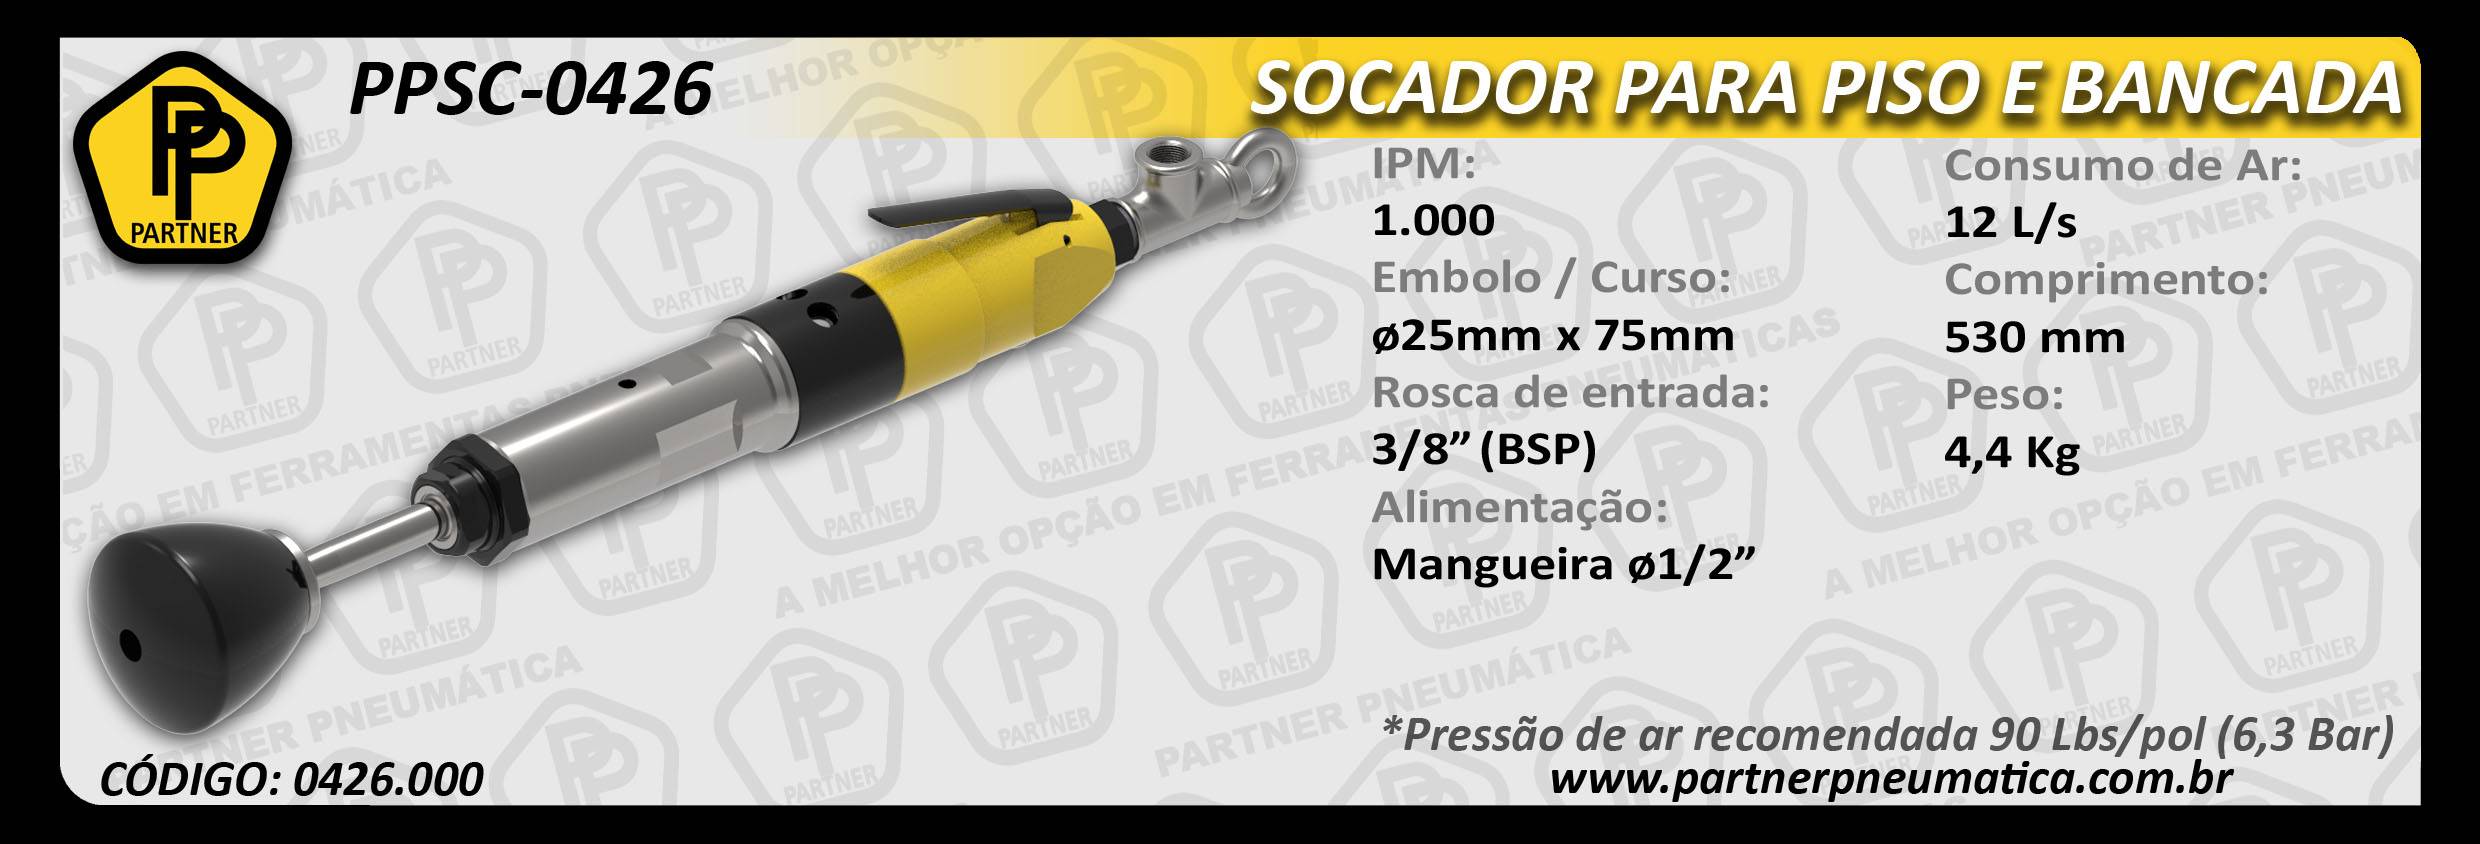 Socador PPSC-0426